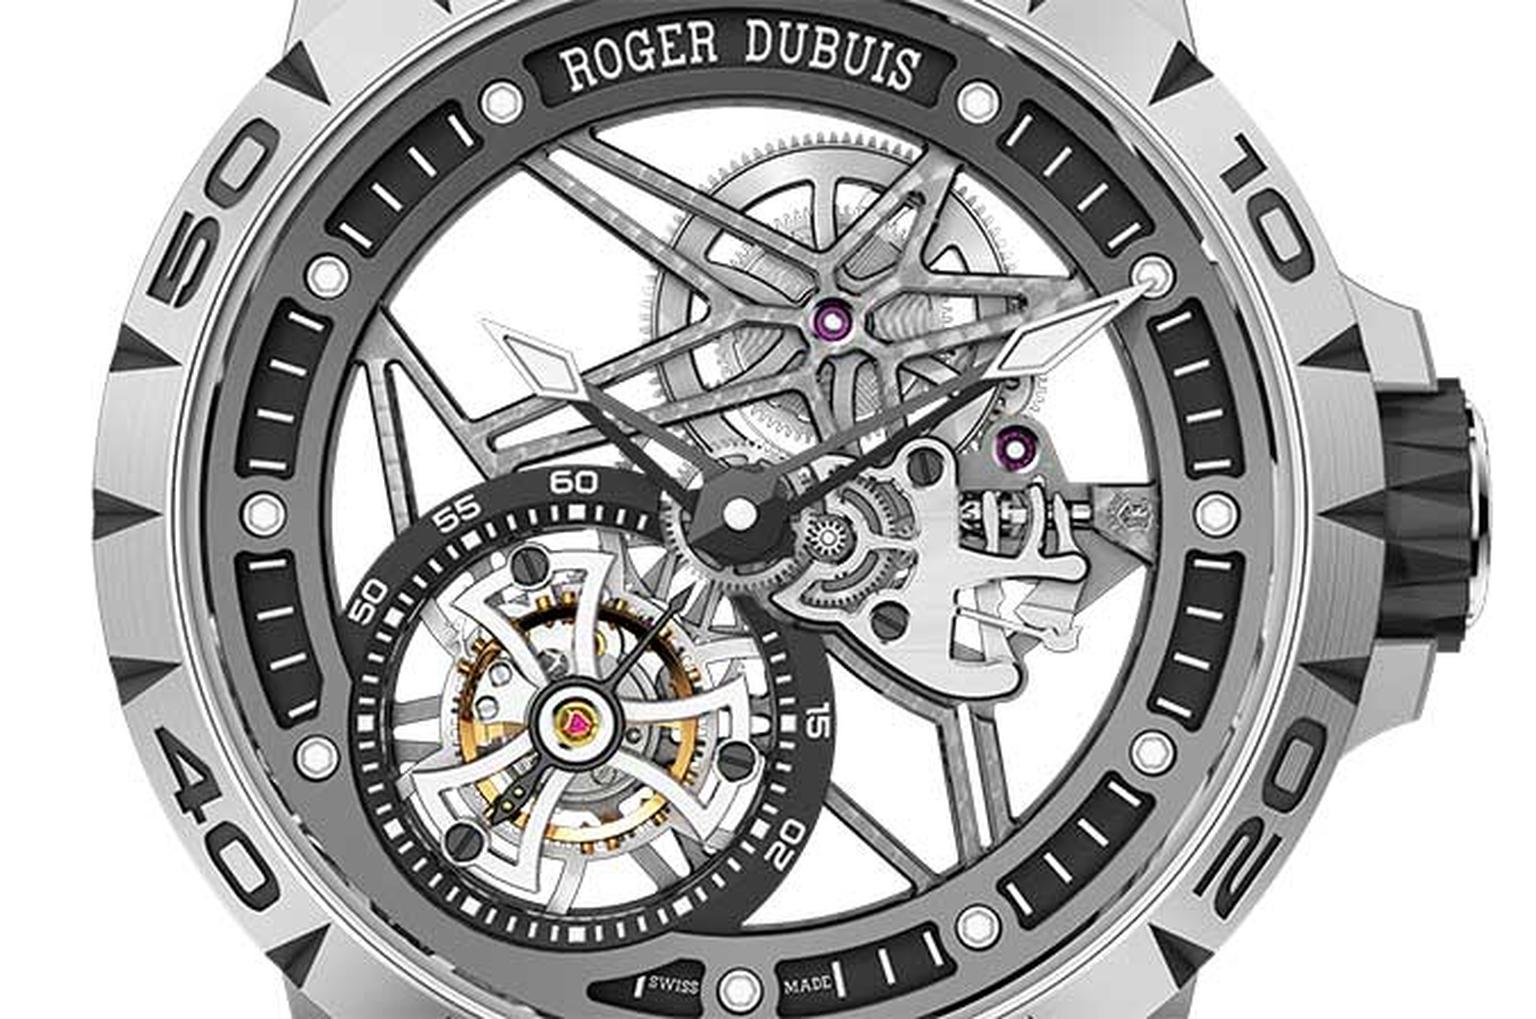 Roger Dubuis Skeleton watch HP